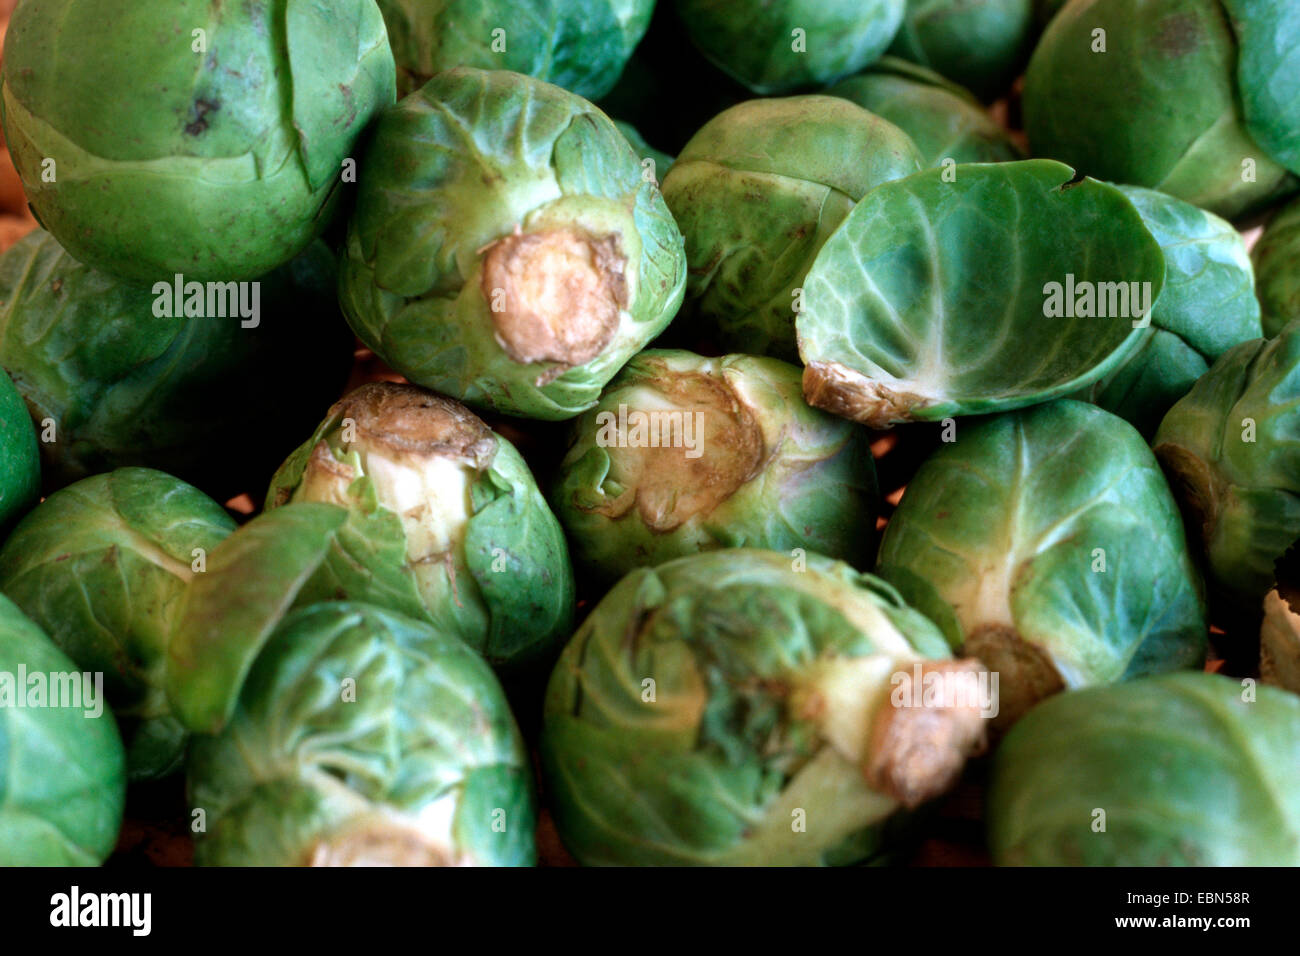 brussel sprouts (Brassica oleraceae var. gemmifera), Brussels sprout Stock Photo